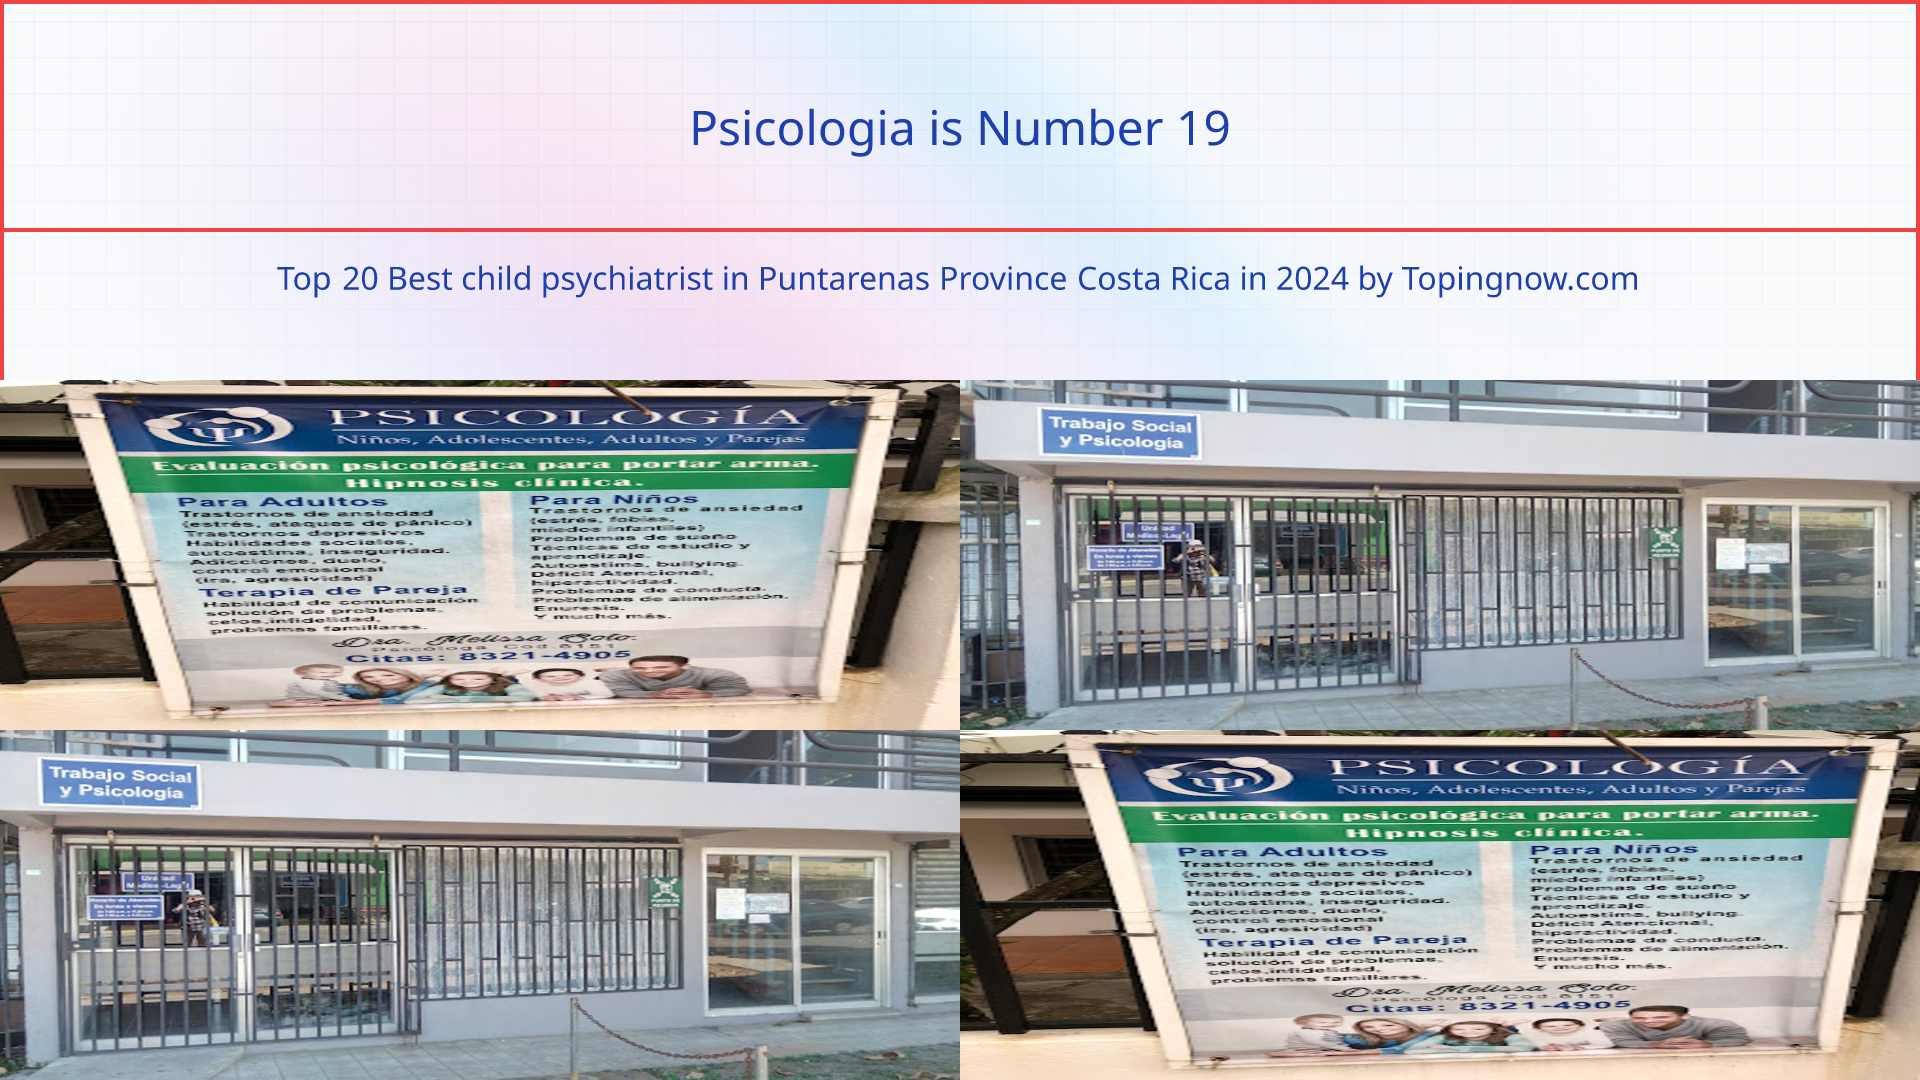 Psicologia: Top 20 Best child psychiatrist in Puntarenas Province Costa Rica in 2024